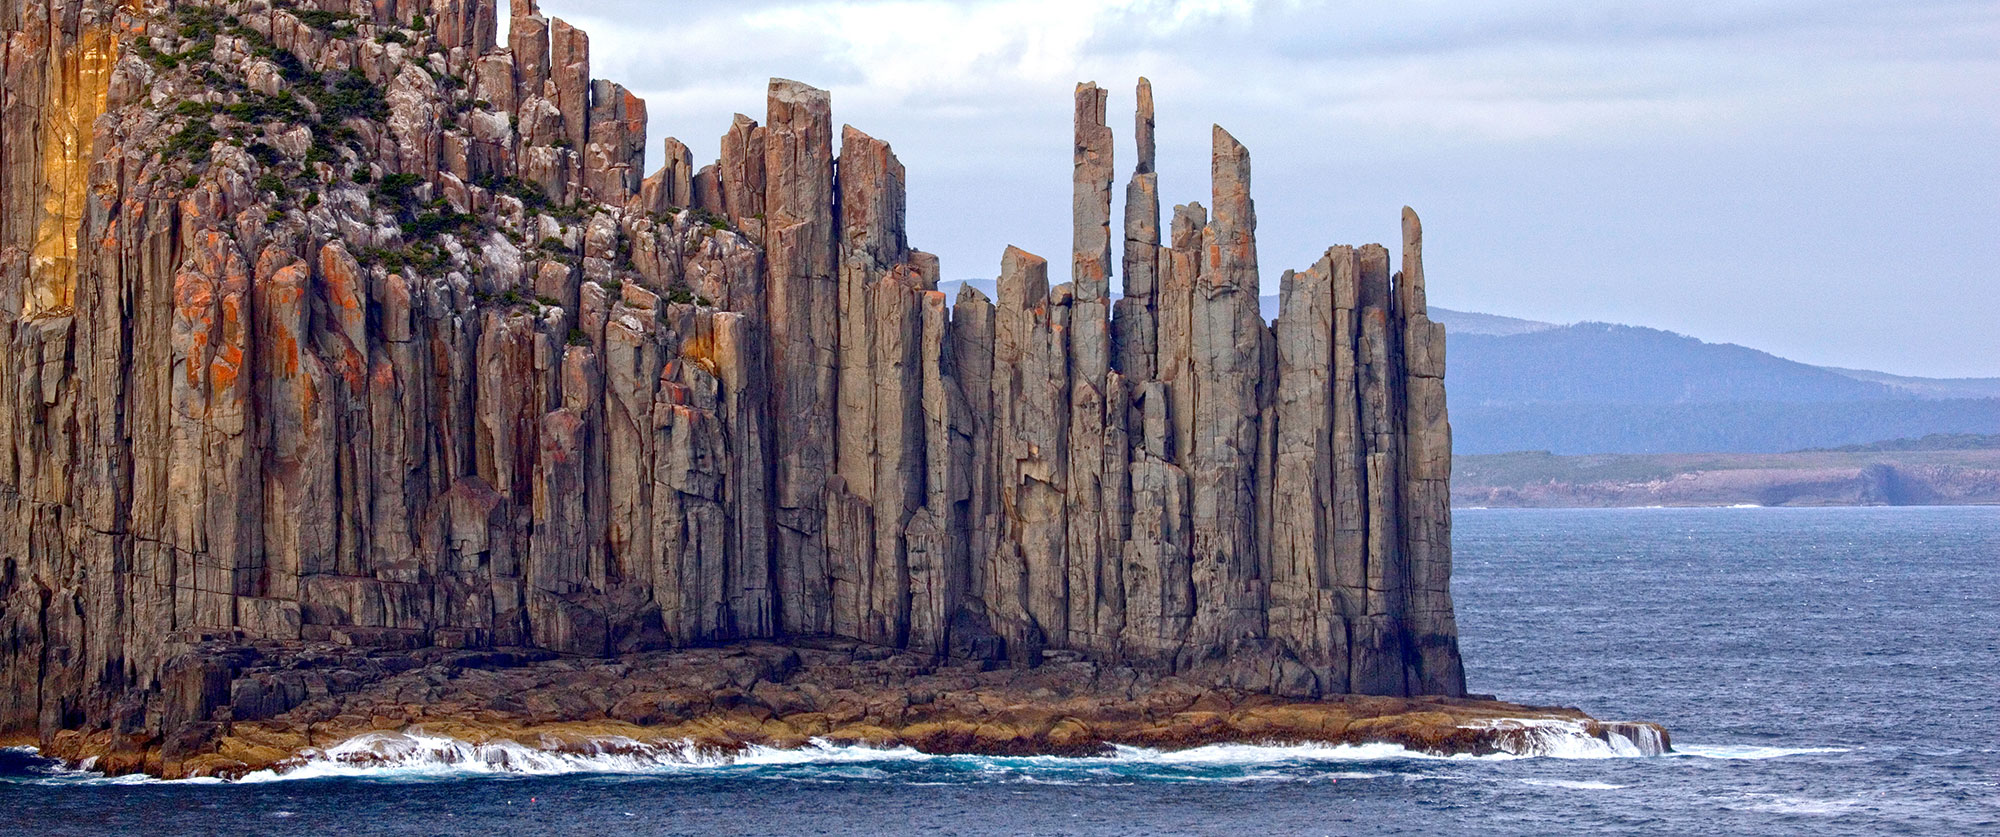 Tasmania, Australia Vacation: Ultimate Wildlife Experience